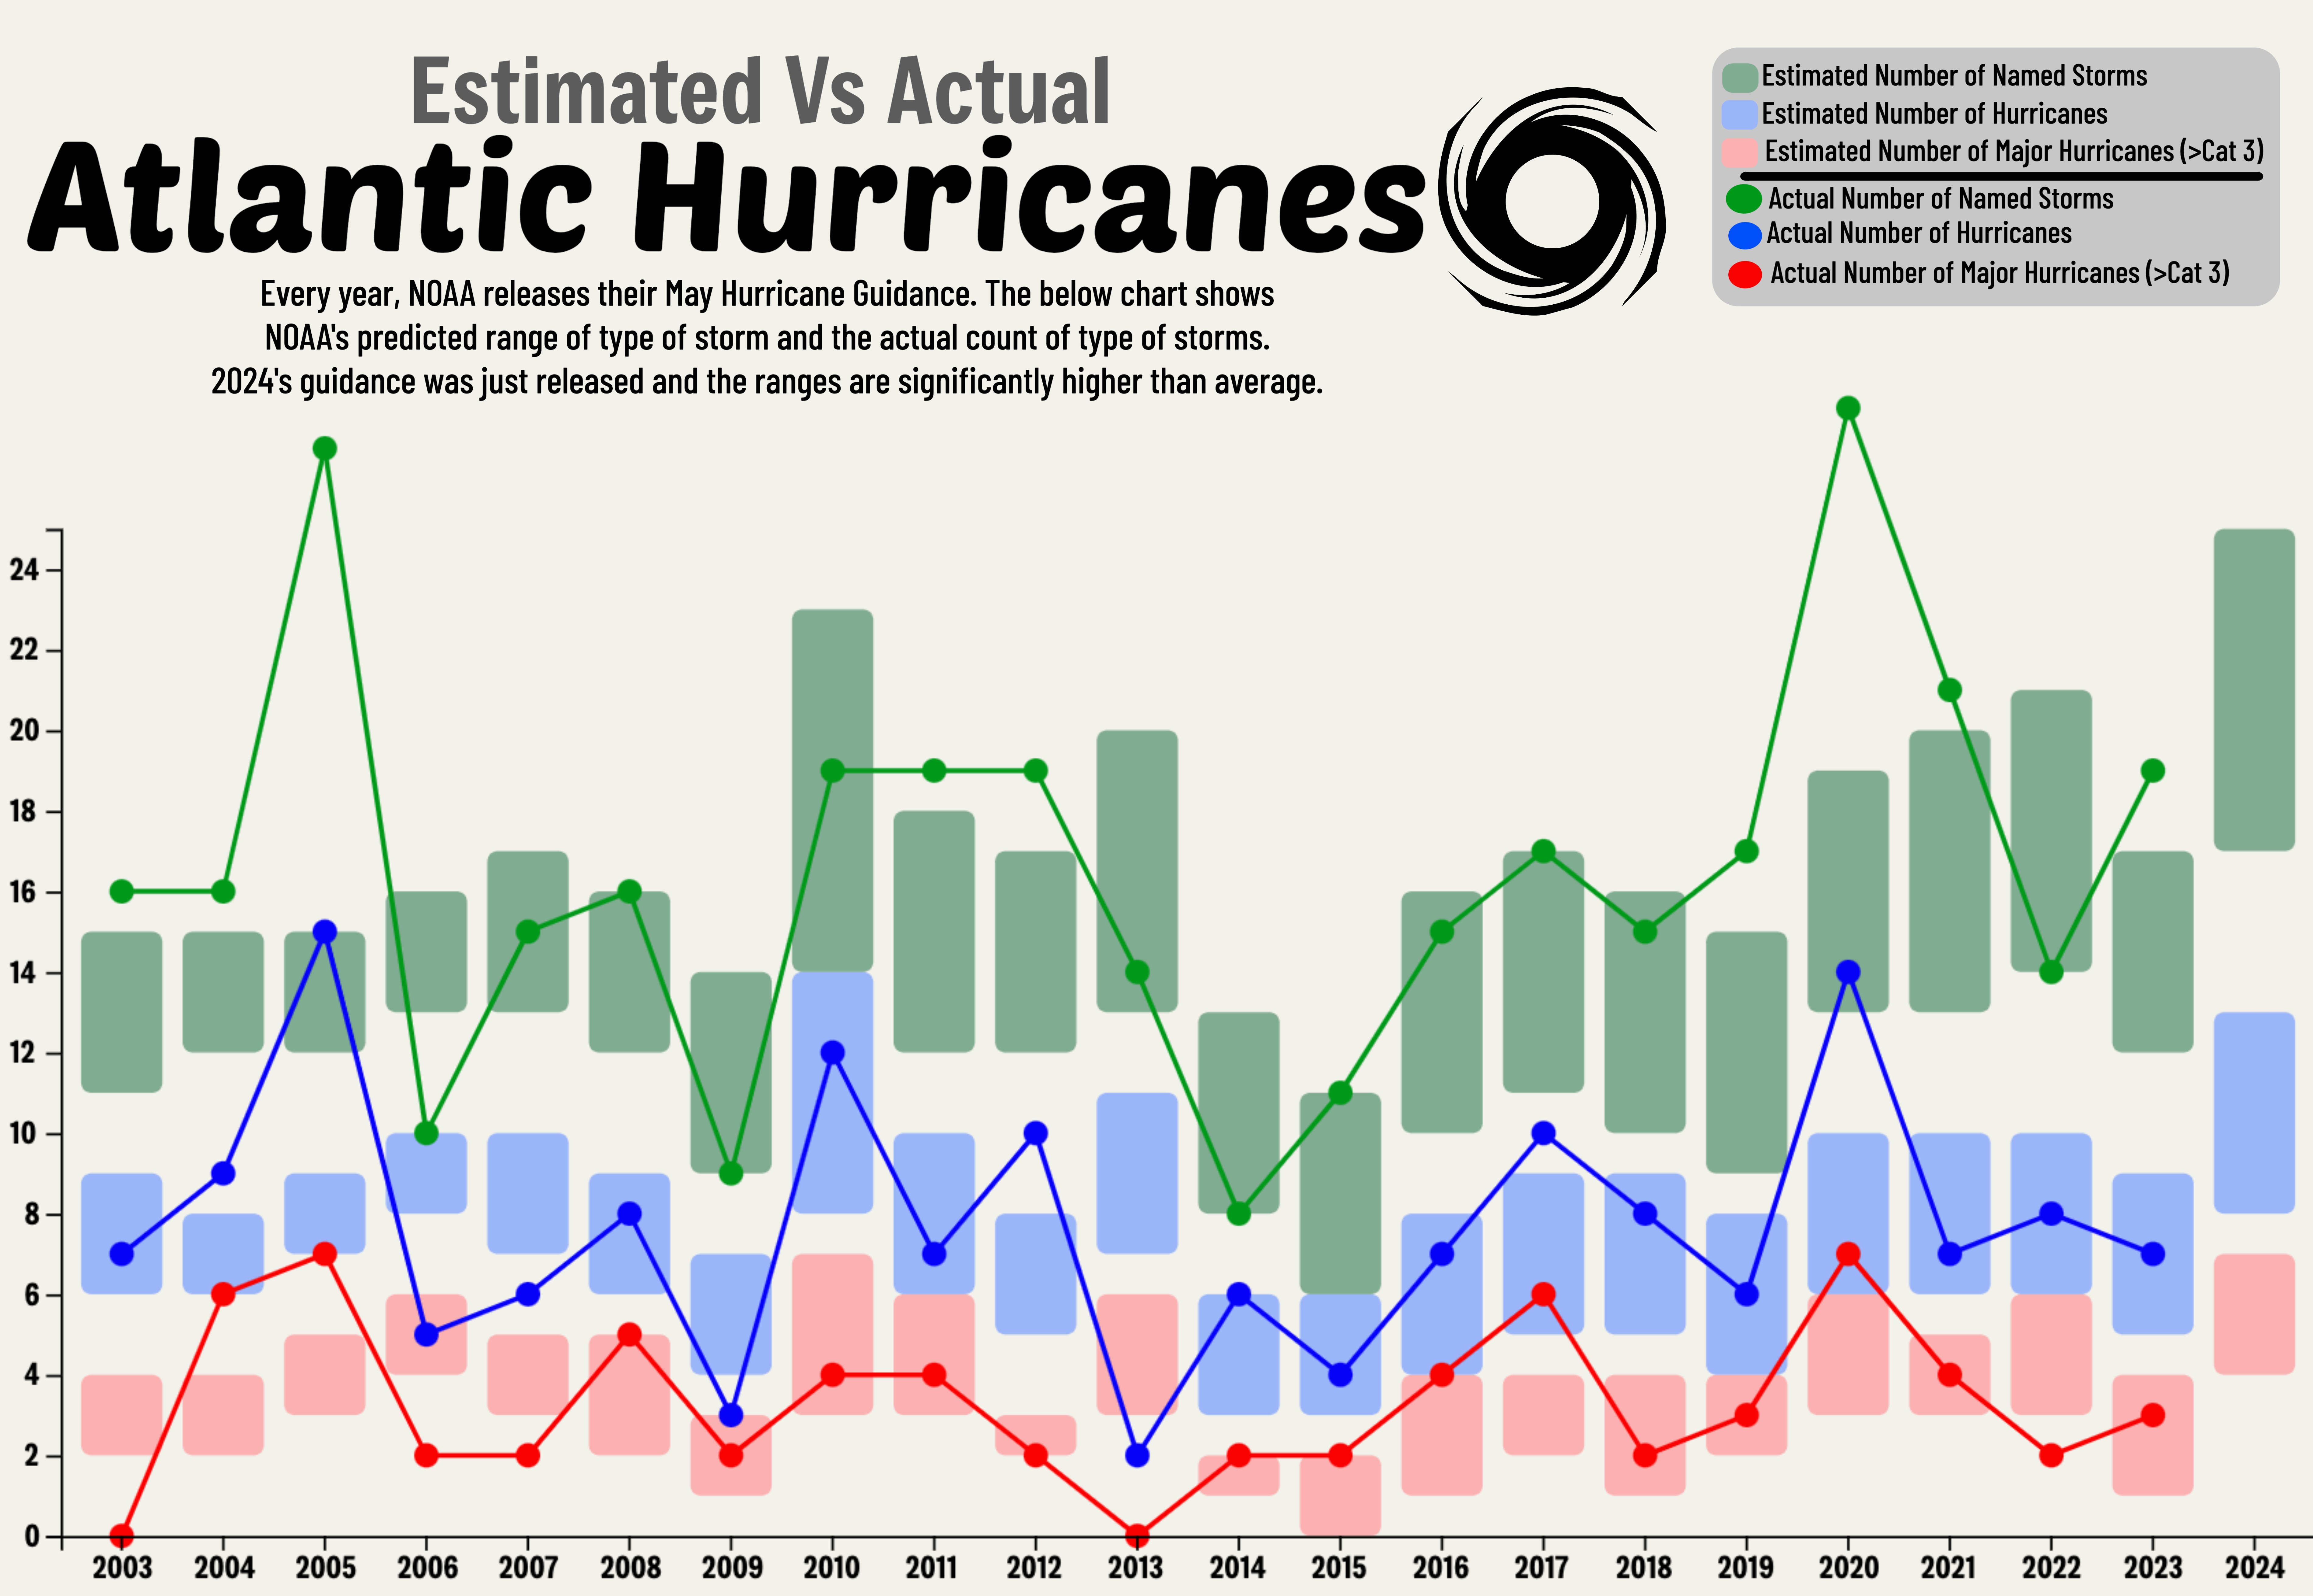 NOAA's Estimated Hurricane Range Compared to Actual Hurricanes In The Atlantic